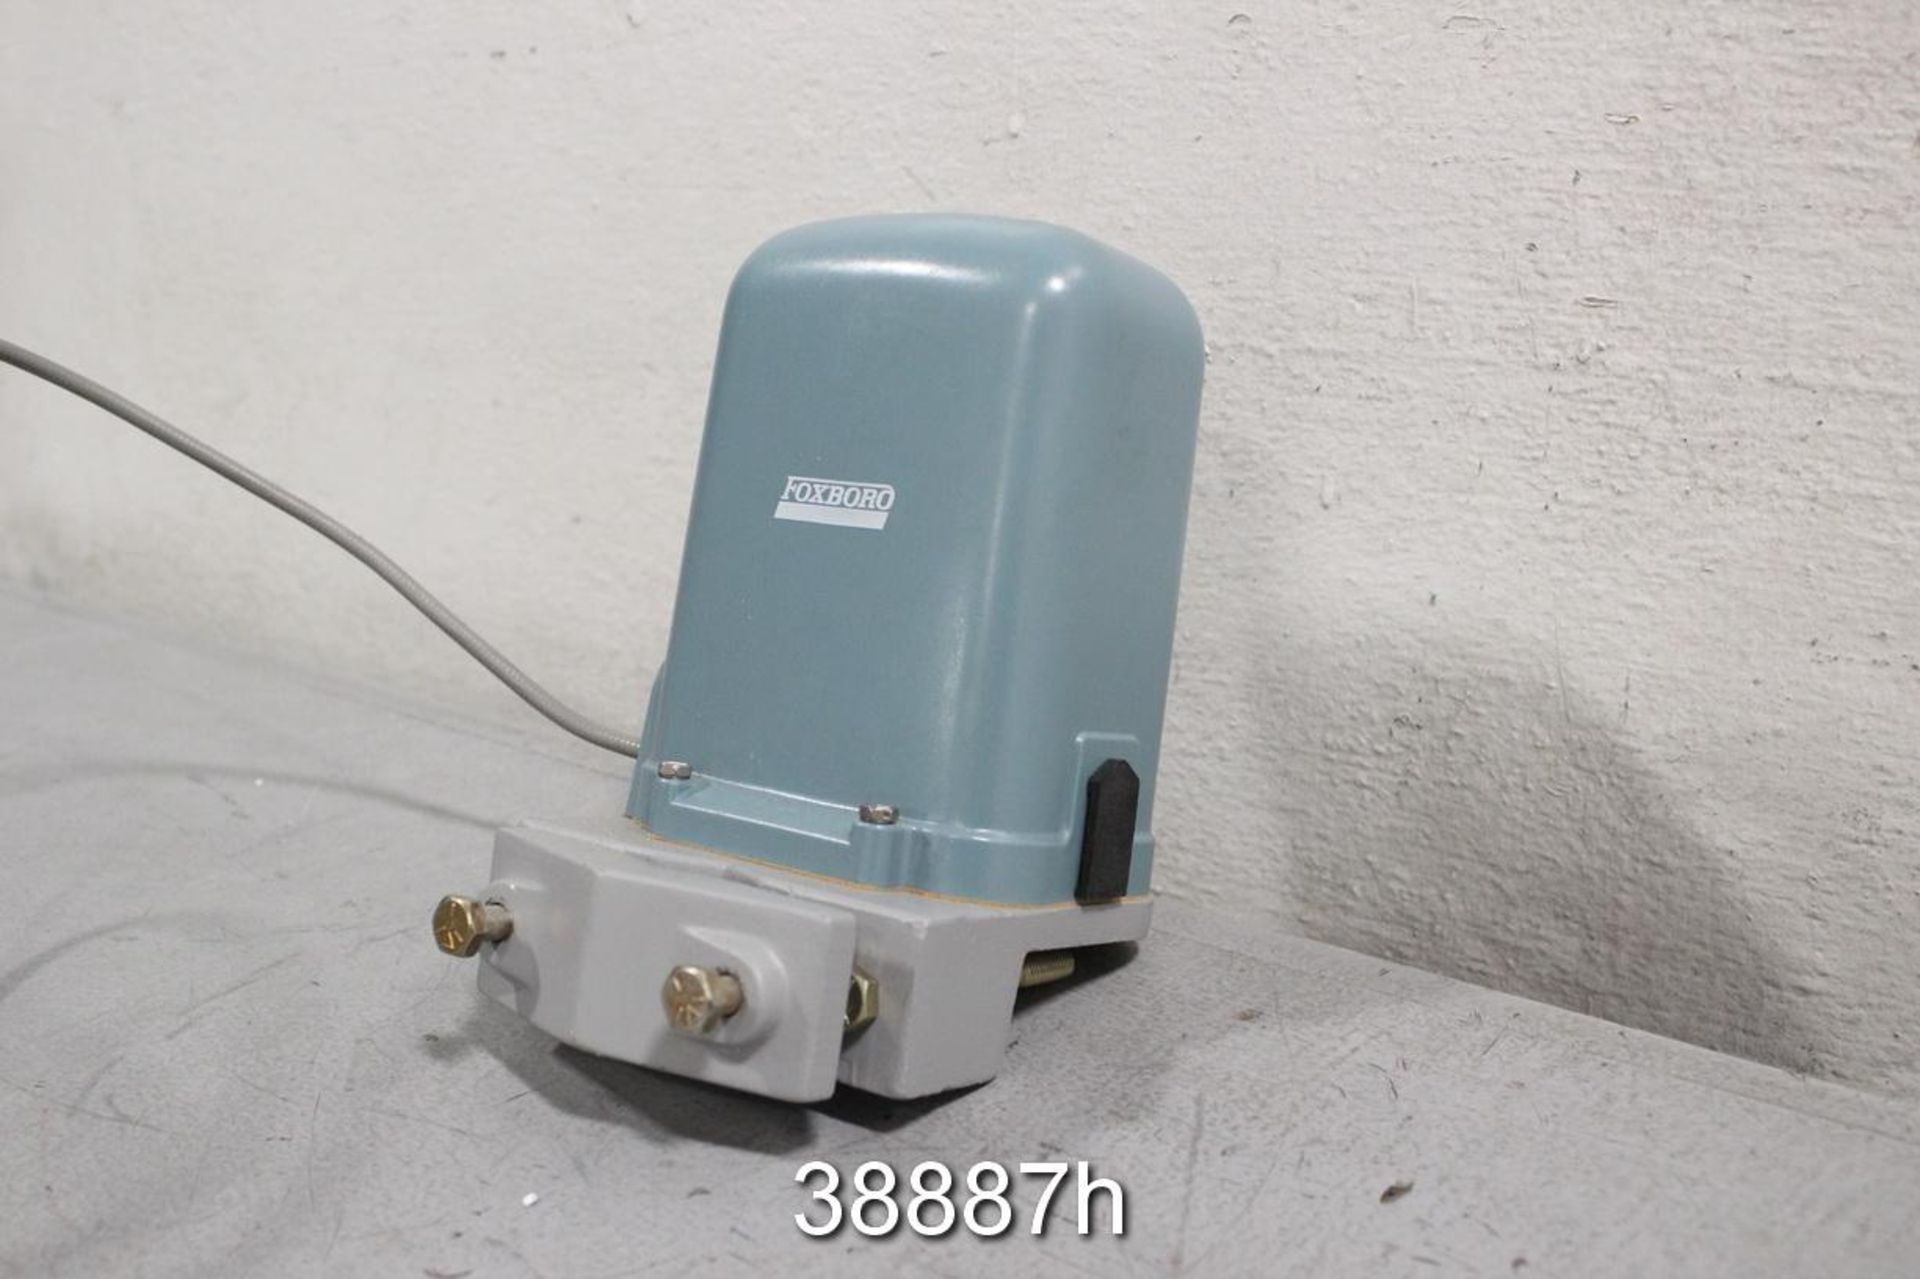 Foxboro 12A Temperature Transmitter, Model 12a, Input Range 150-350 Fahrenheit, Output Range 3-15 - Image 8 of 10